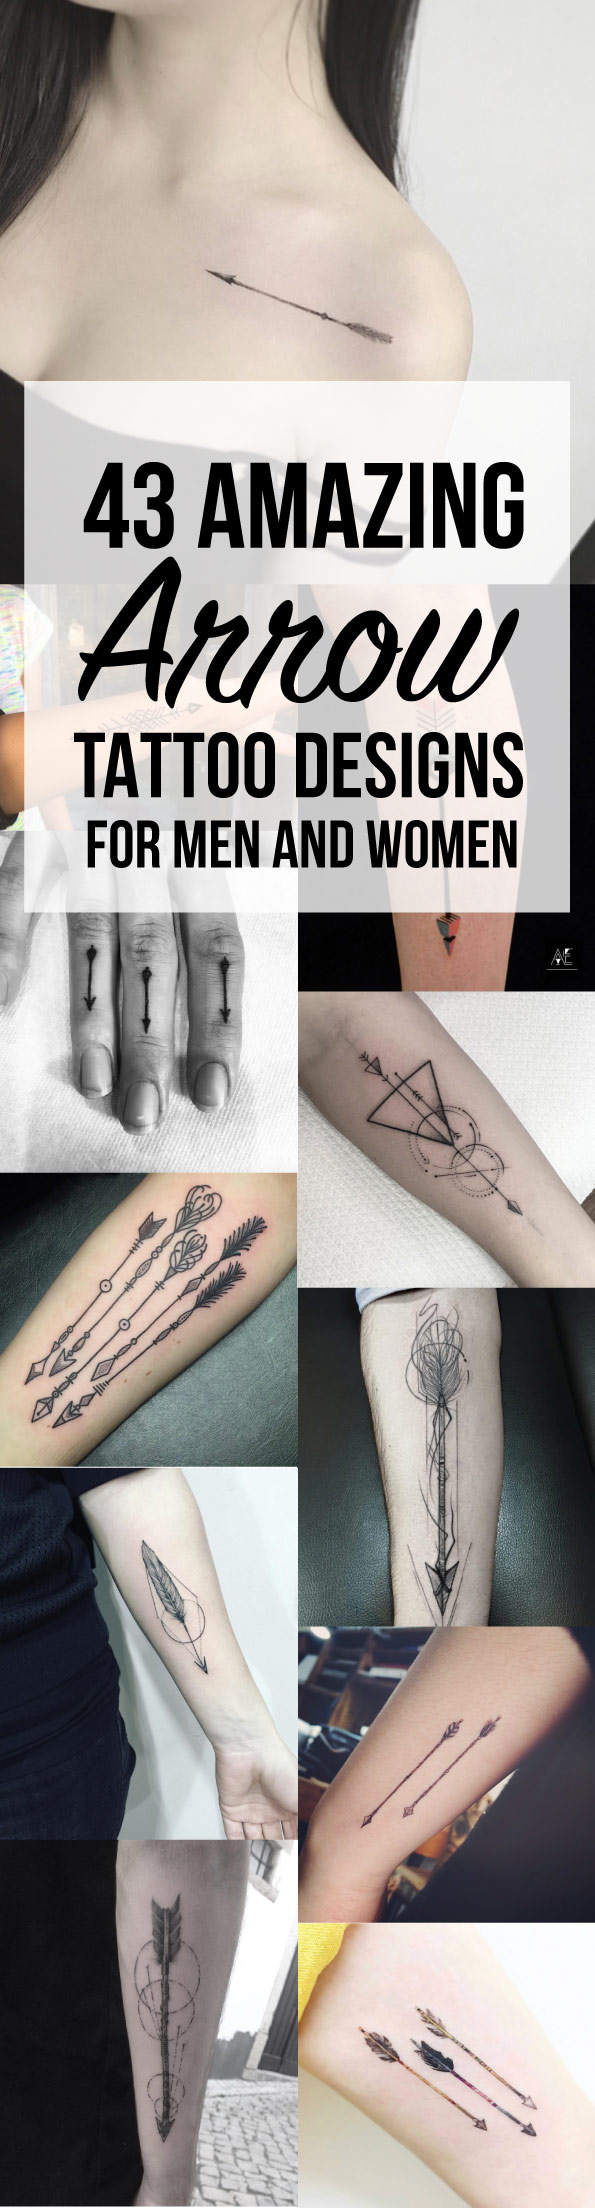 43 Amazing Arrow Tattoo Designs for Men and Women - TattooBlend